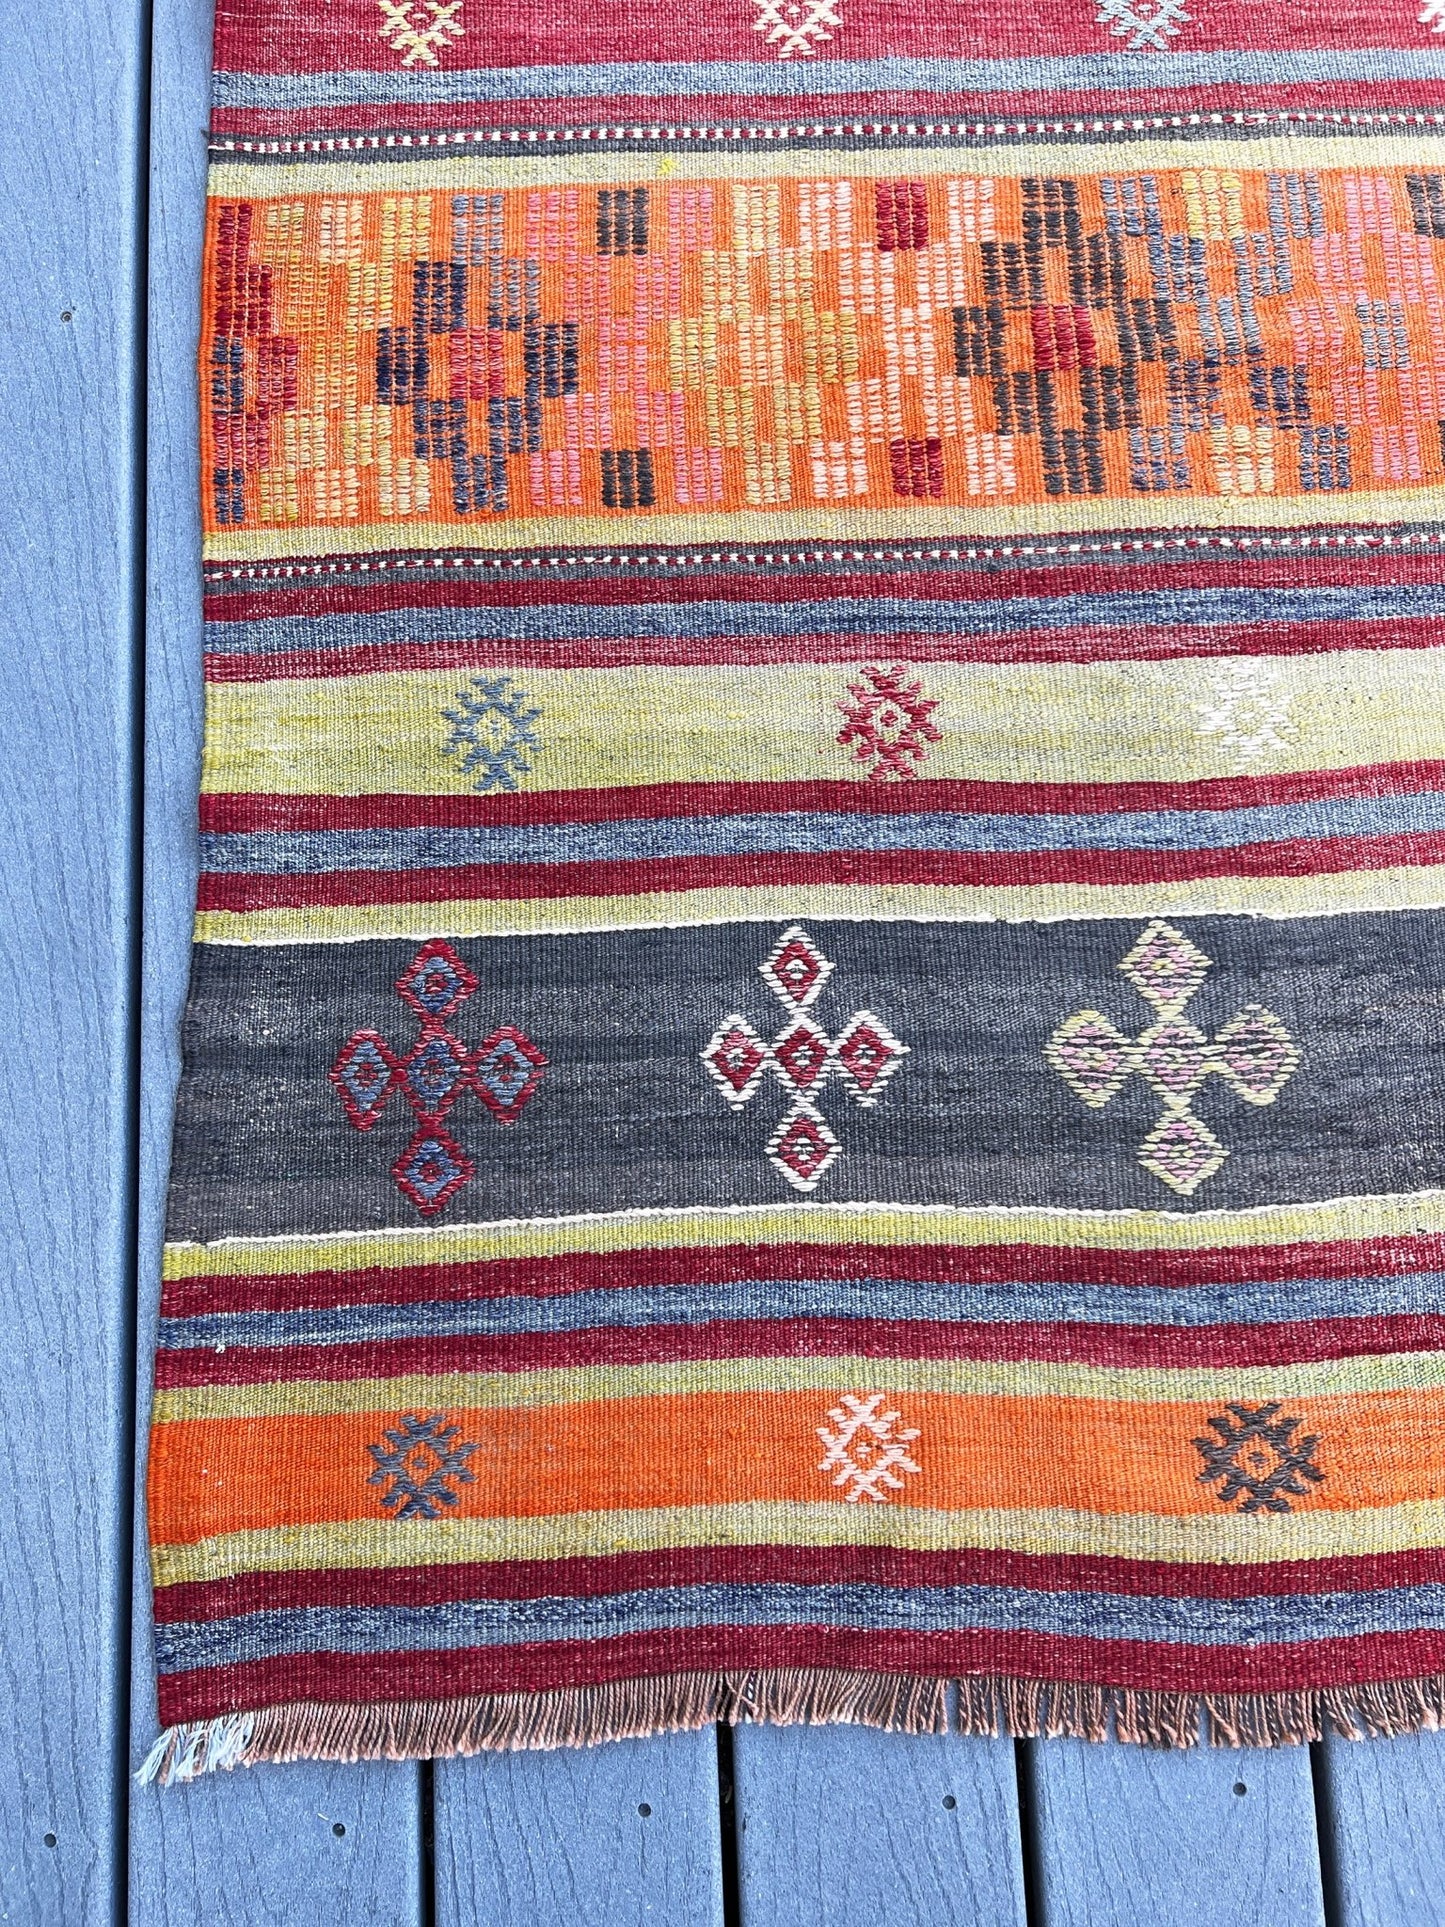 Selendi handmade wool Vintage Turkish Kilim Rug shop berkeley Canada, California. Oriental rug shop san francisco bay area